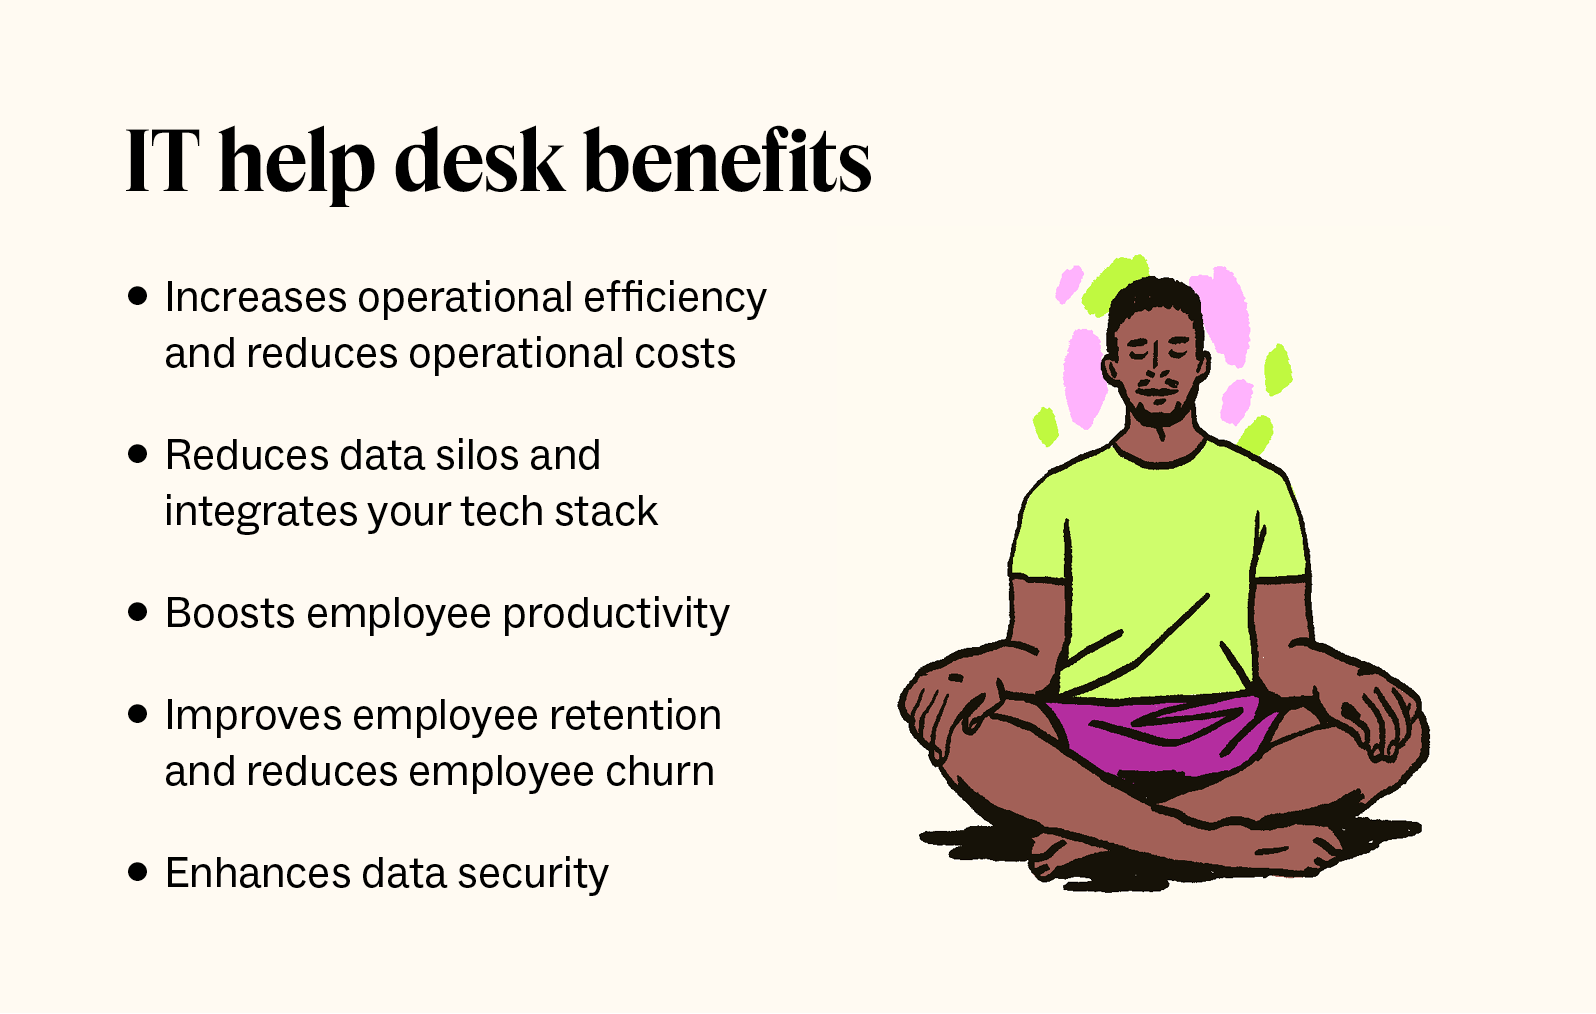 Benefits of IT help desk services